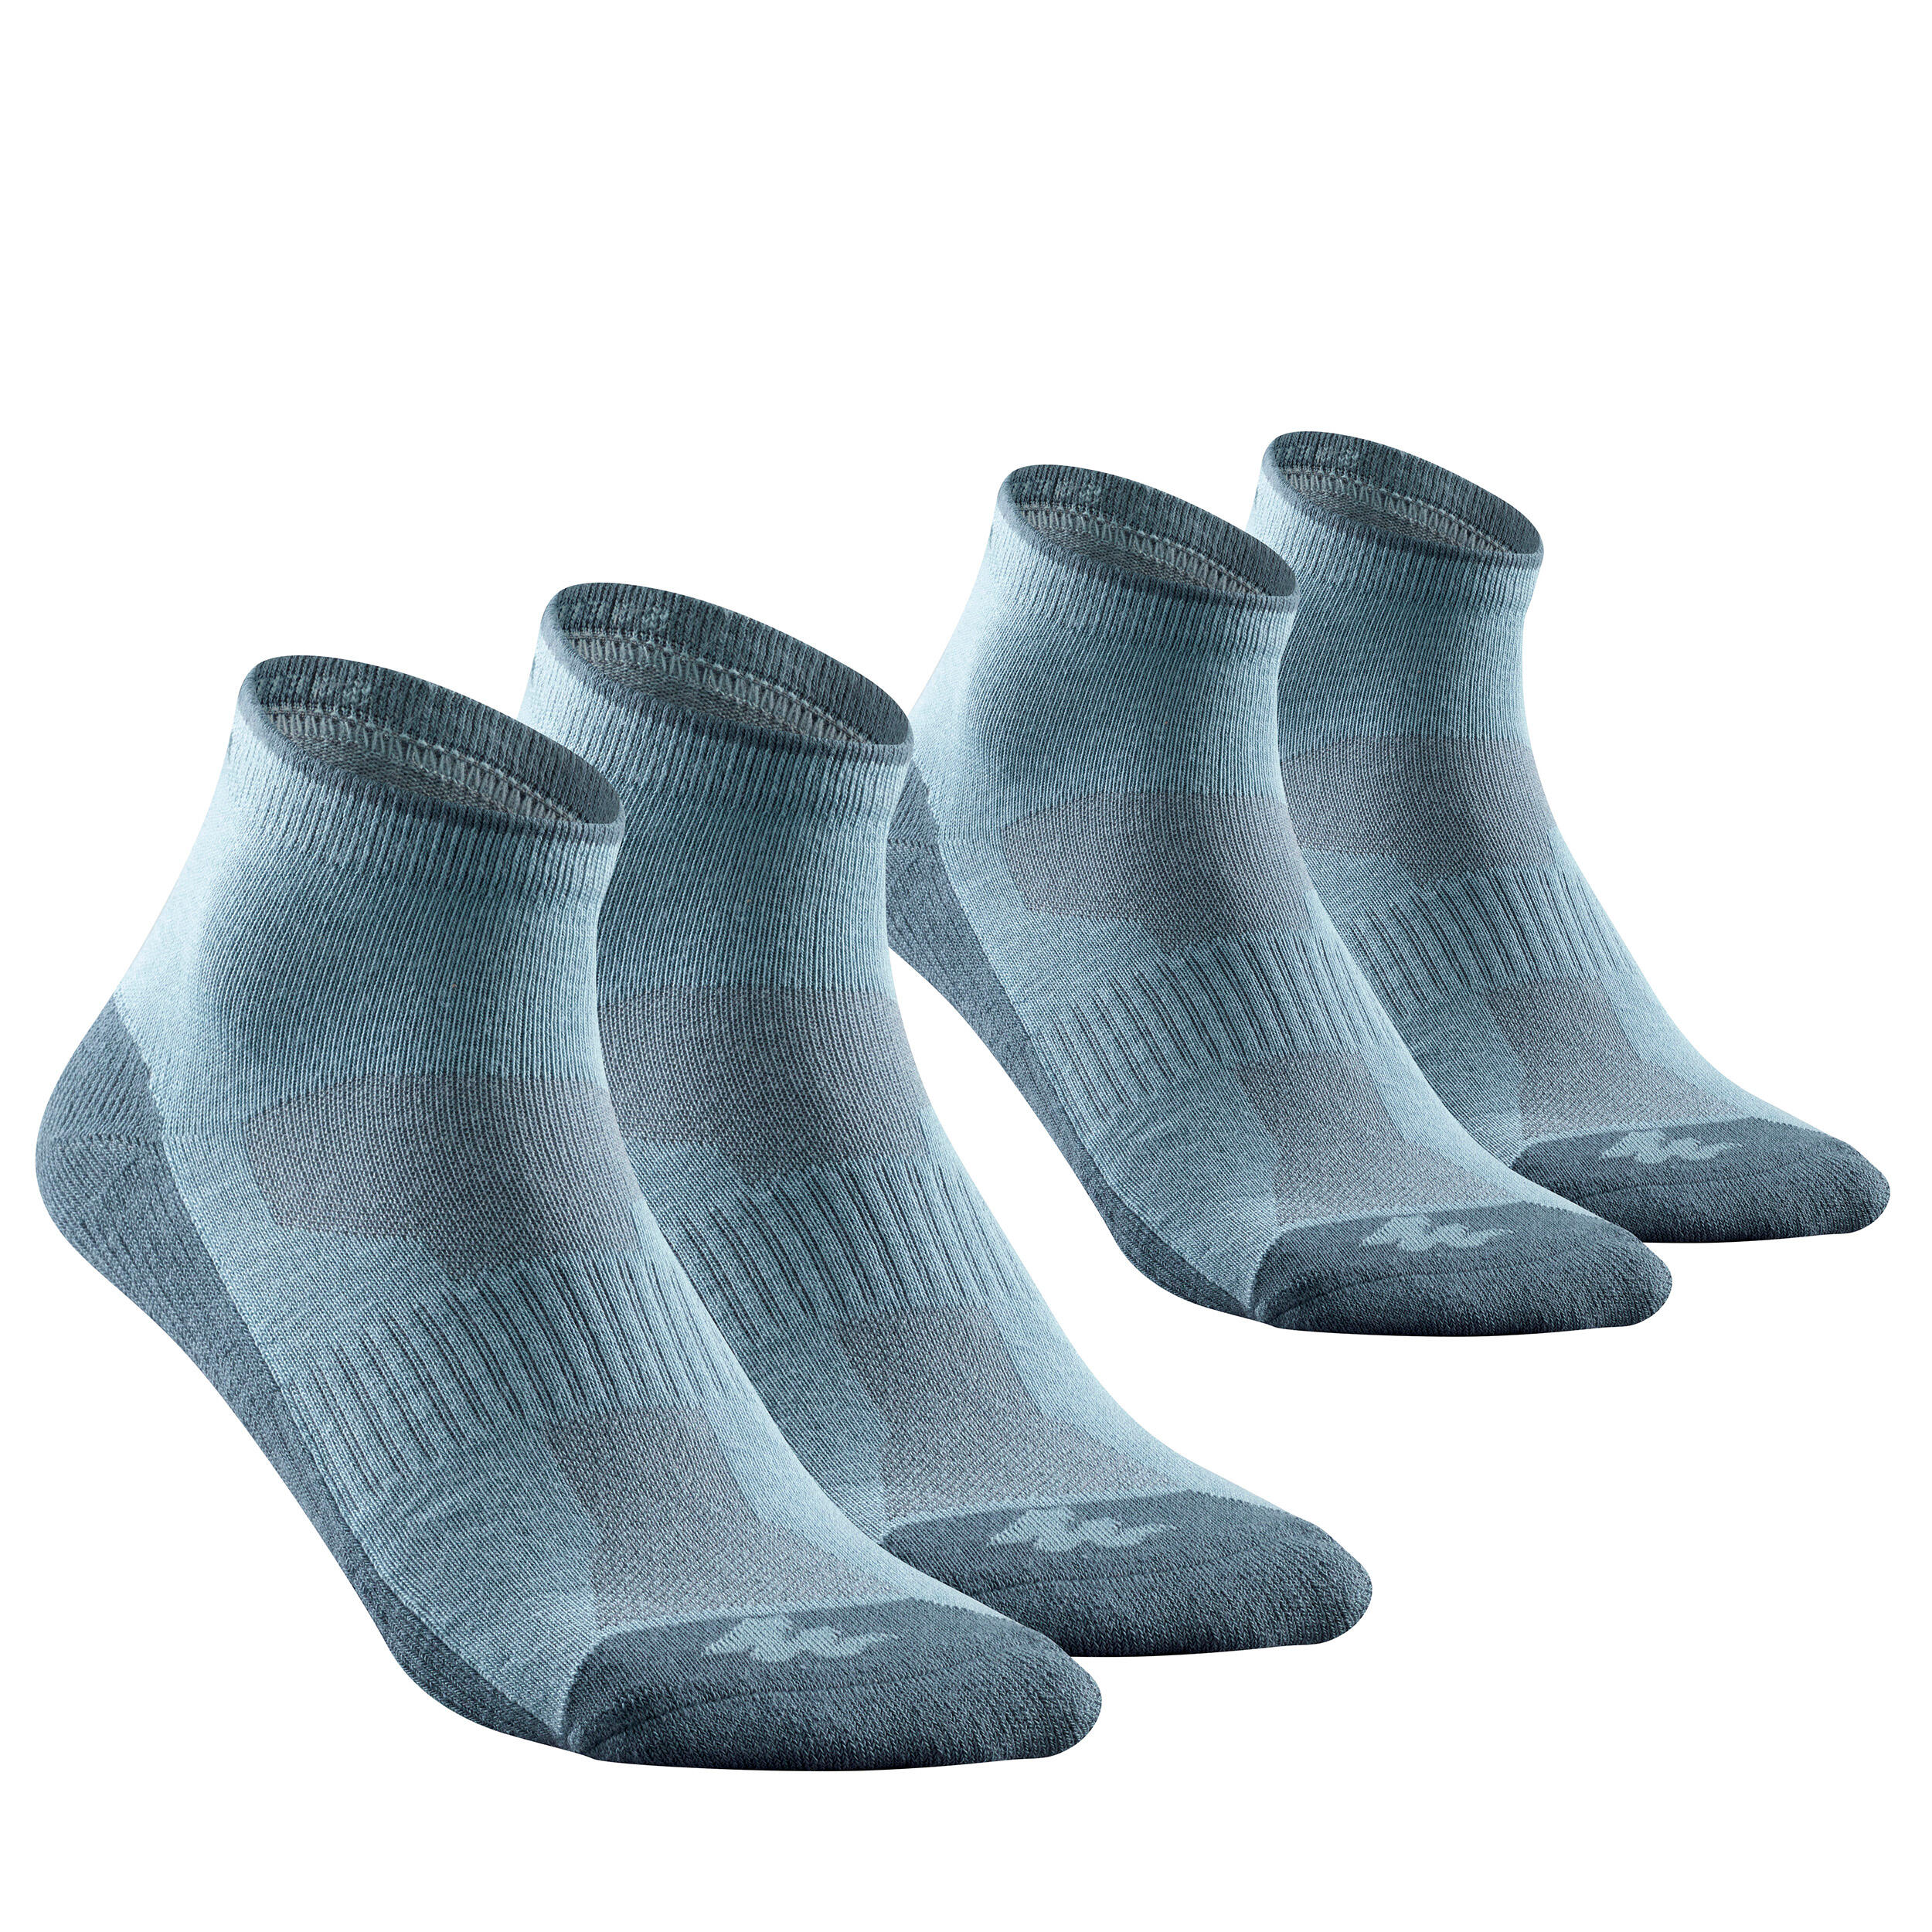 QUECHUA Country walking socks - NH 100 Mid - X 2 pairs - Blue